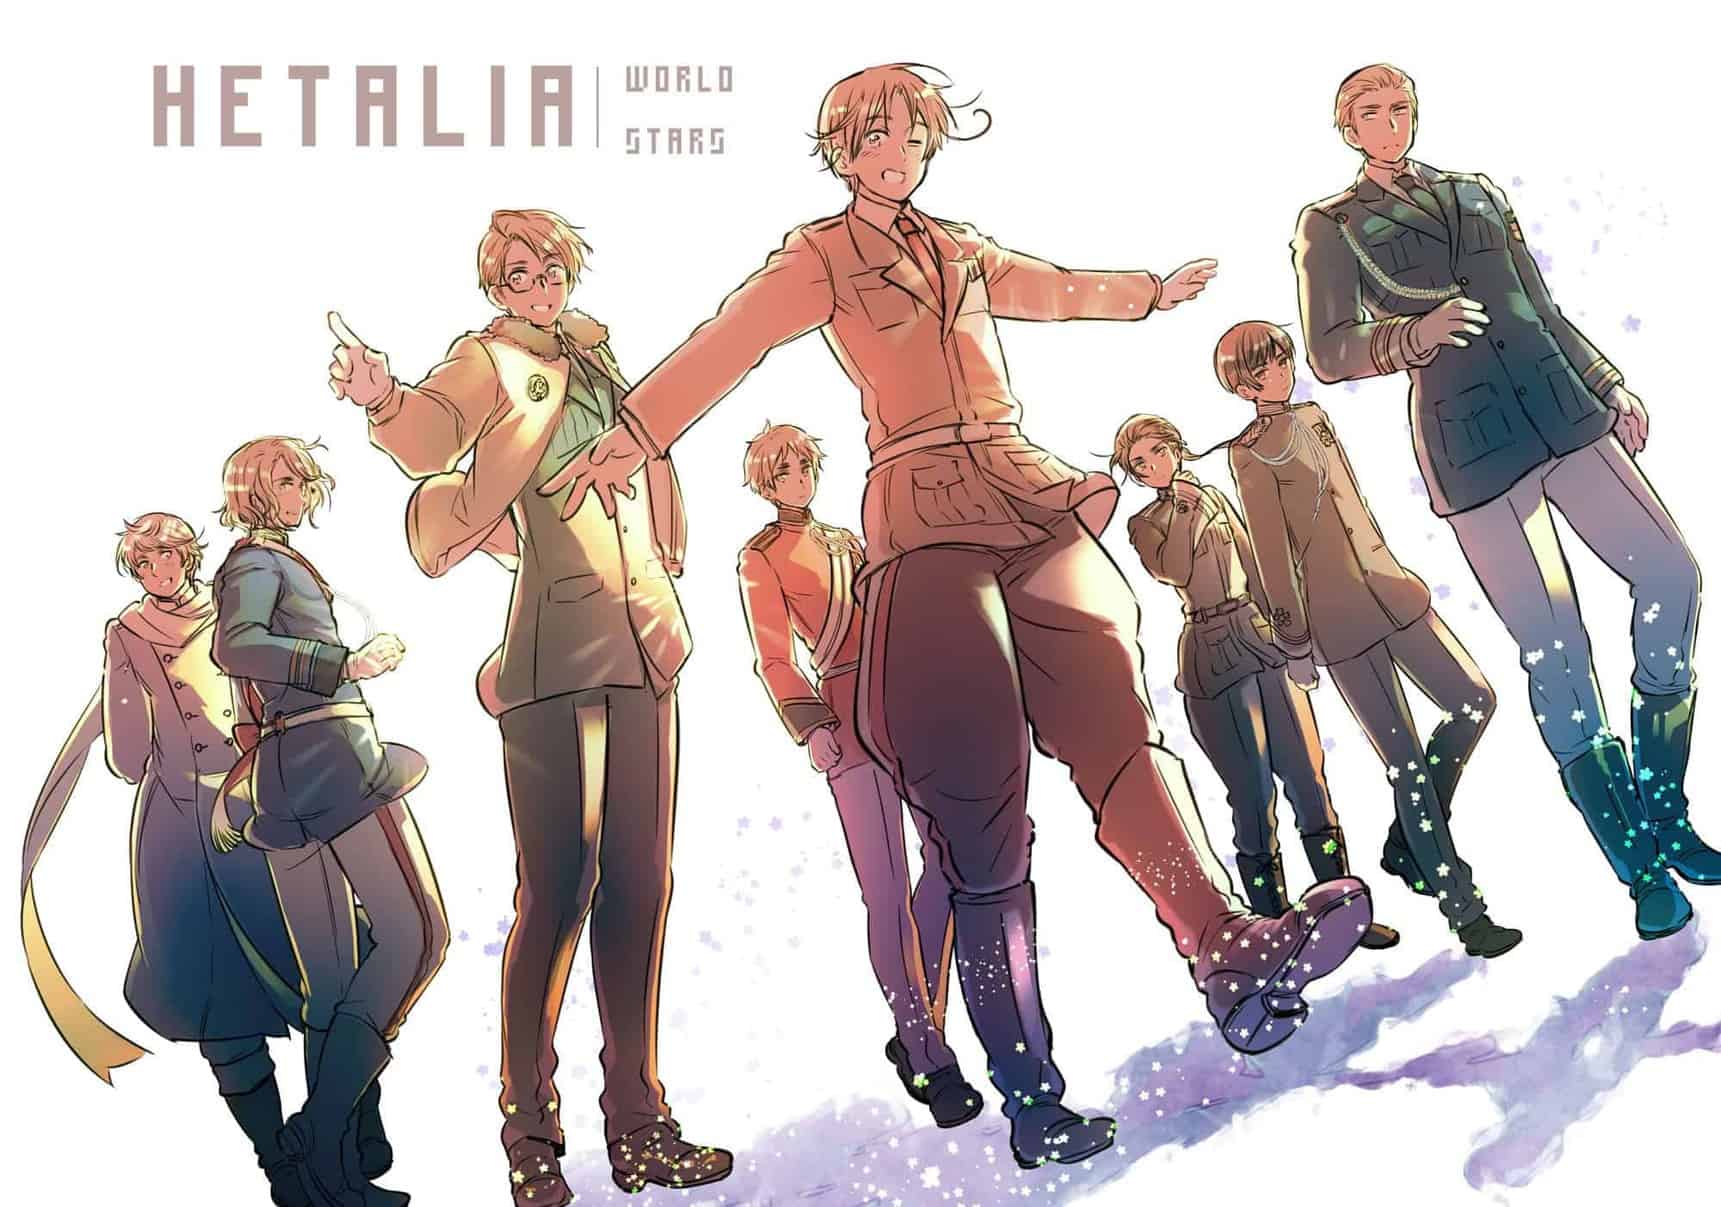 Hetalia World Stars Anime Release Date + Teaser • The Awesome One